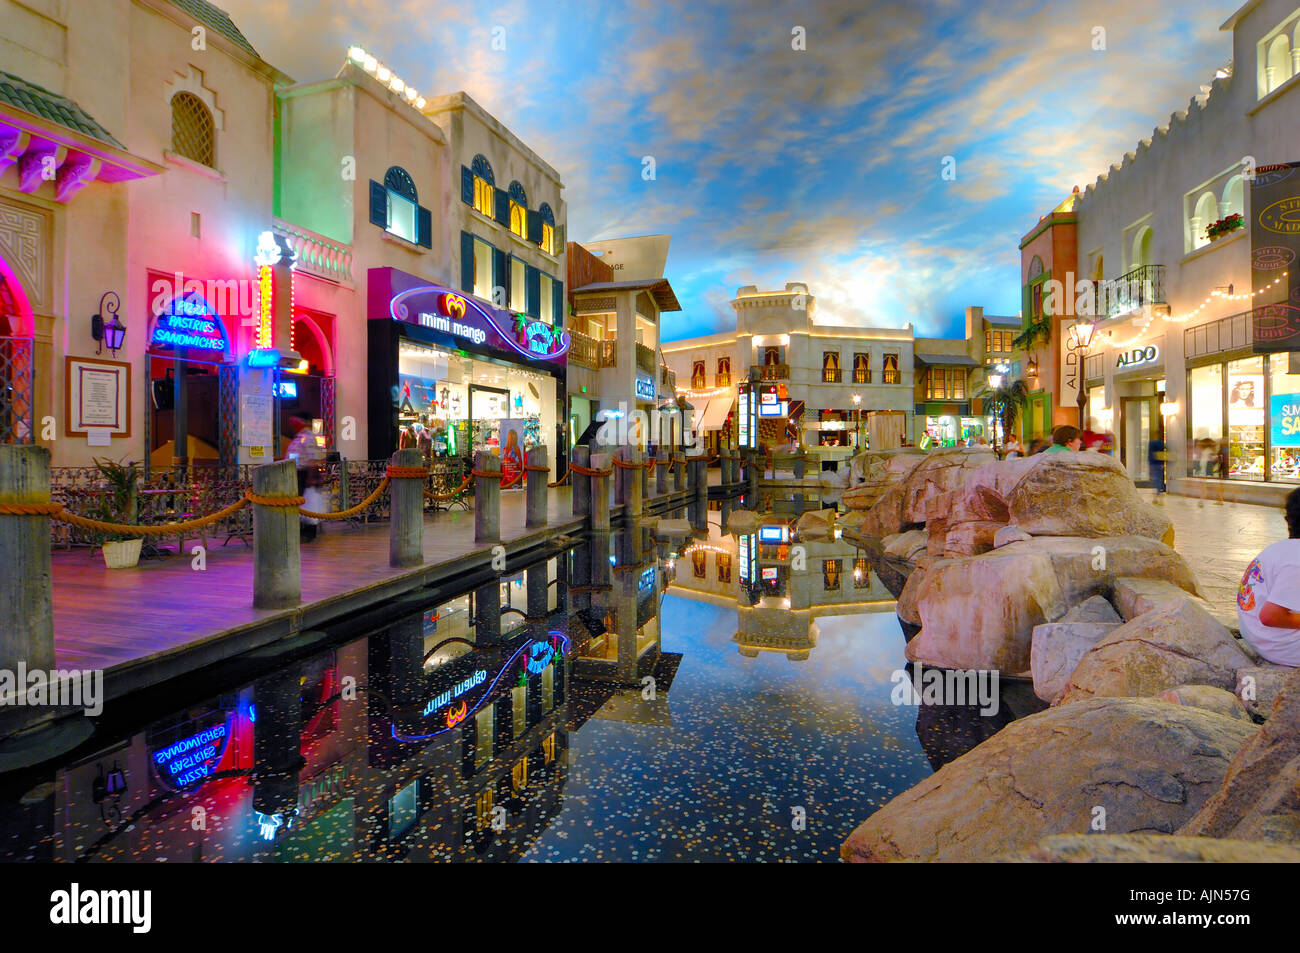 Shopping Mall in Las Vegas, NV